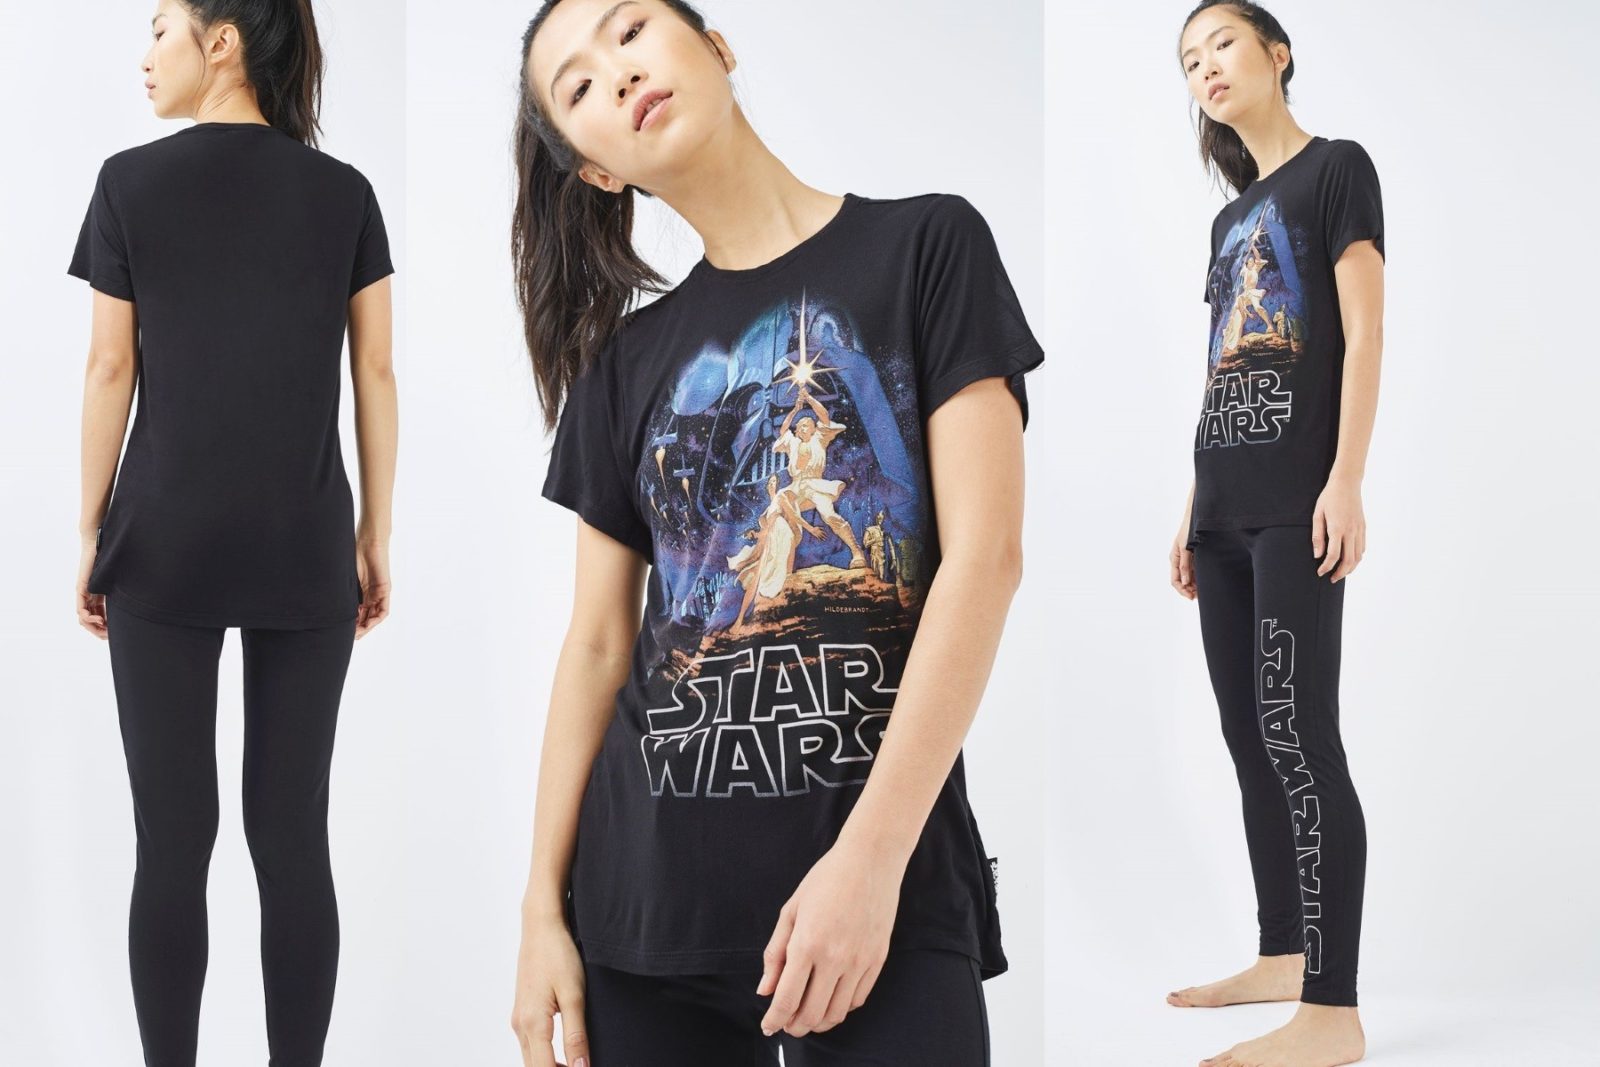 Women’s Star Wars nightwear set at Topshop